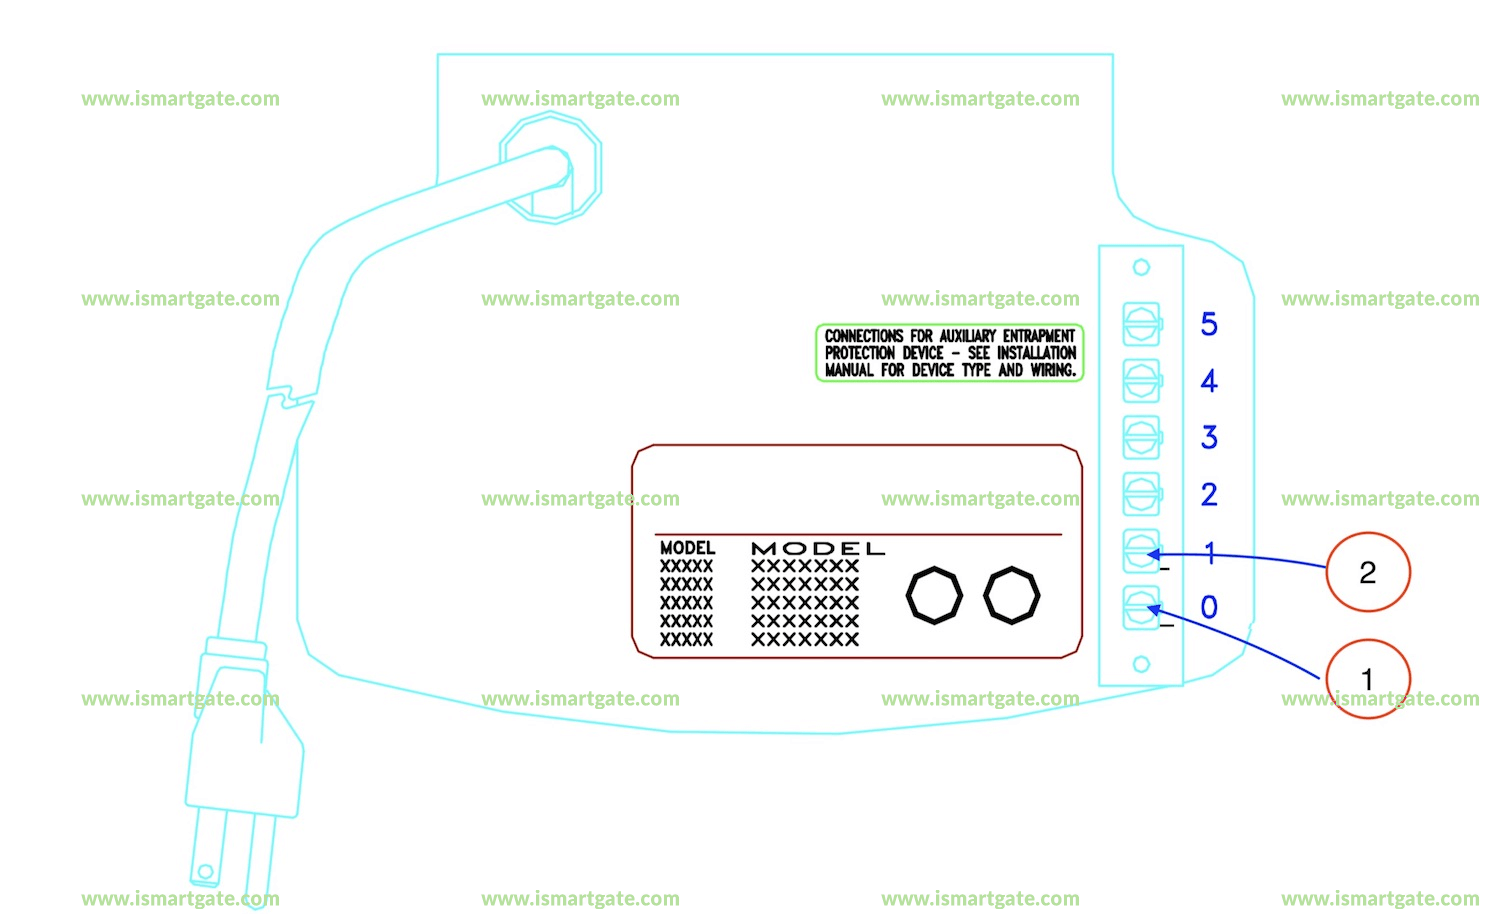 Wiring diagram for ALLSTAR 6000